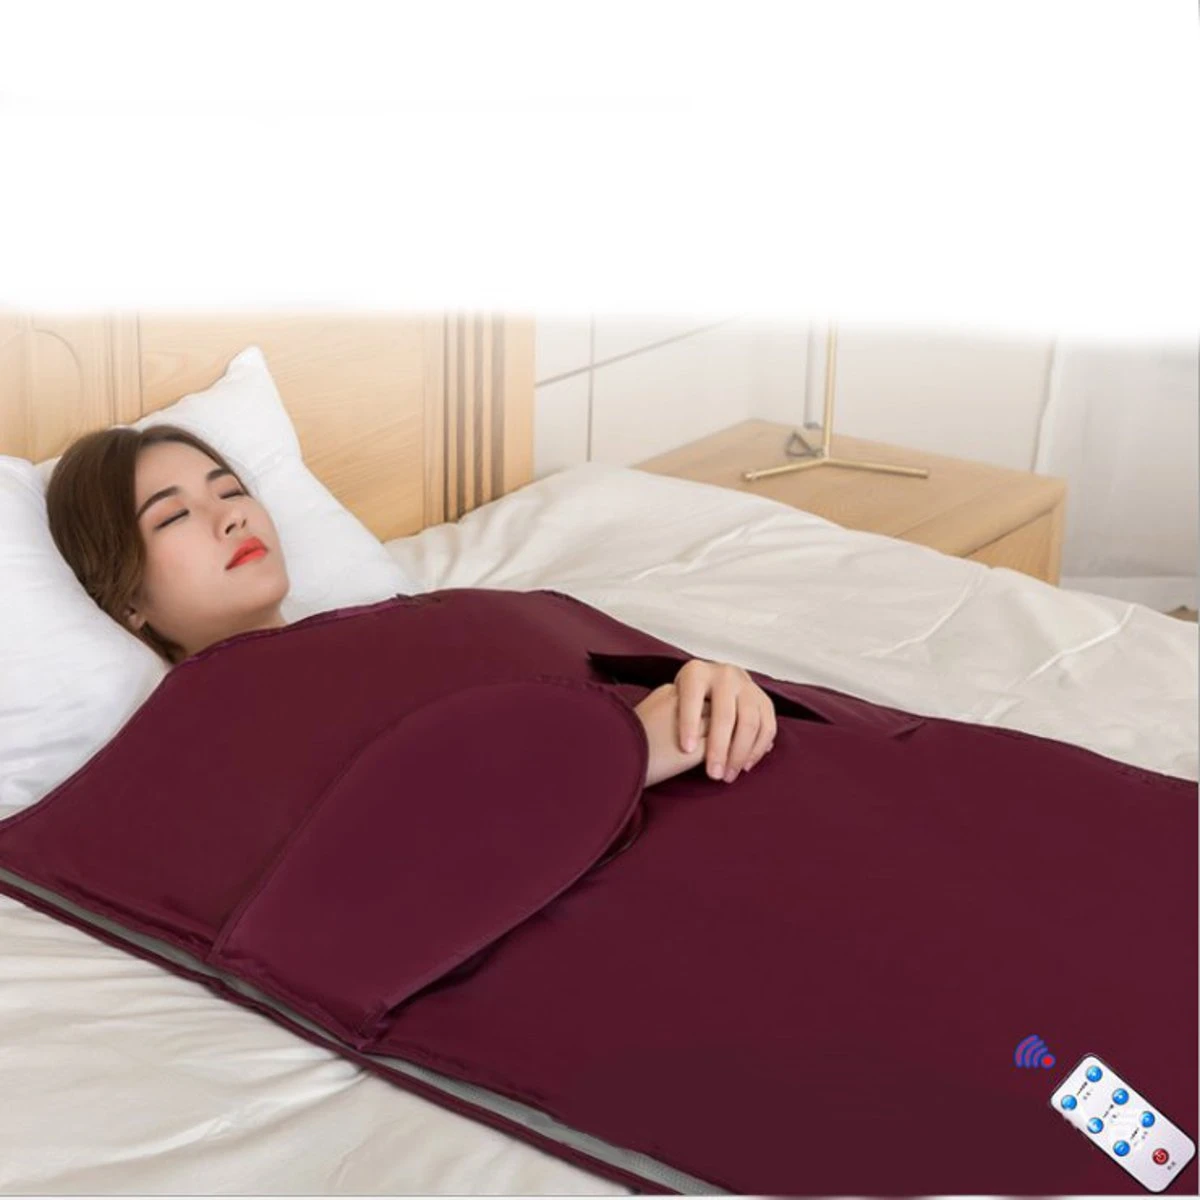 Find 110V/220V Far Infrared Sauna Blanket Detox Slimming Suit Home SPA Losing Weight Machine for Sale on Gipsybee.com